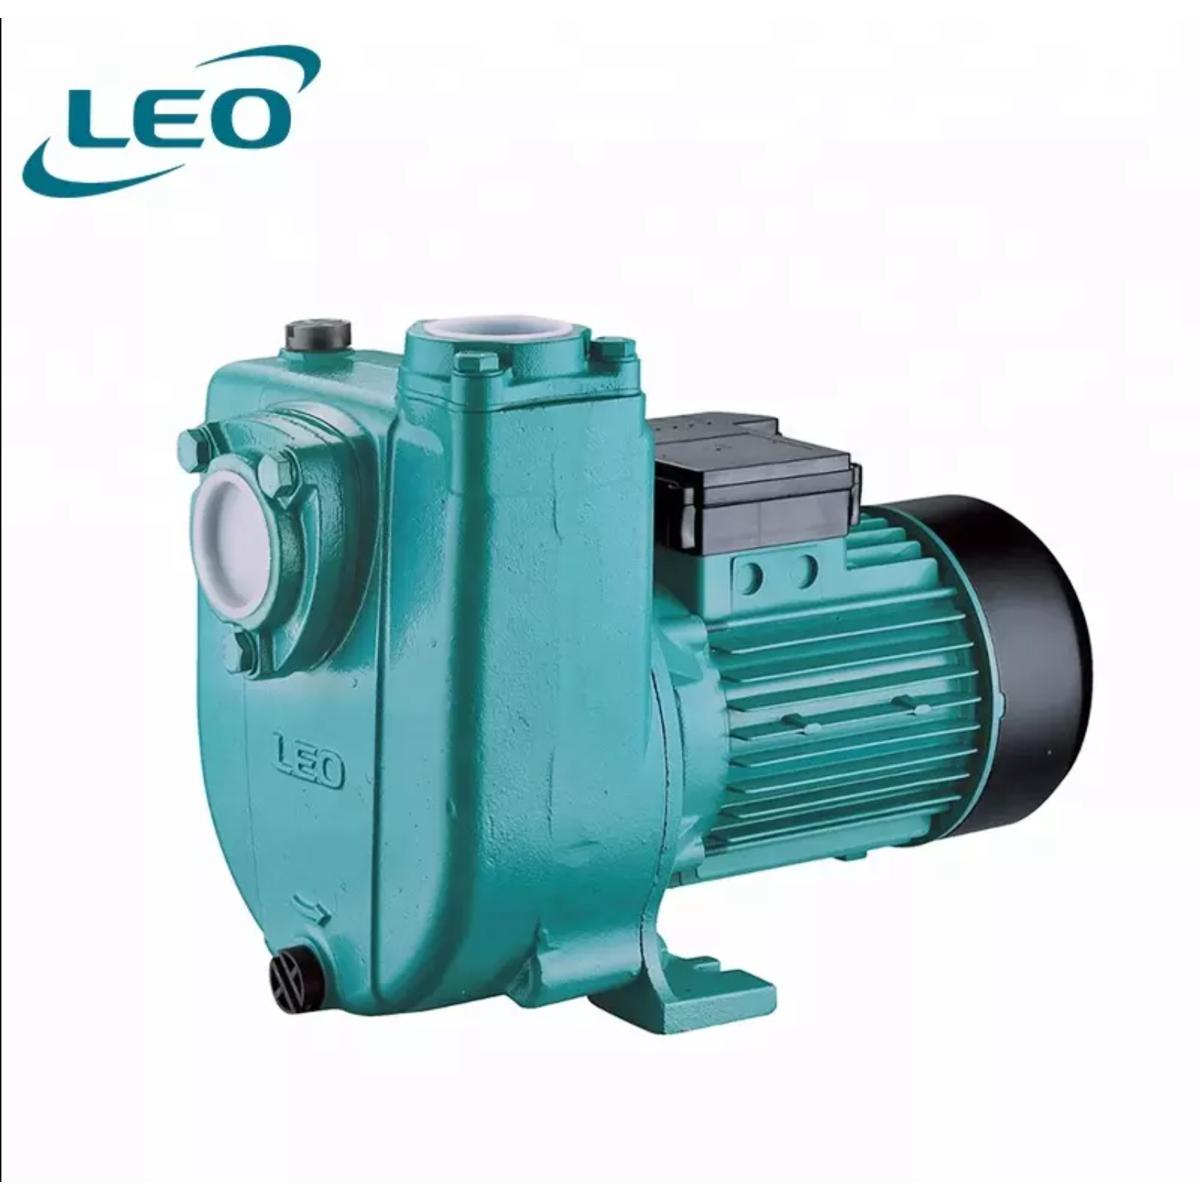 LEO - XHS-2000- 1500W - 2.0HP - 380V~400V THREE PHASE DIRTY - Clean Water SELF PRIMING Centrifugal Pump - European STANDARD